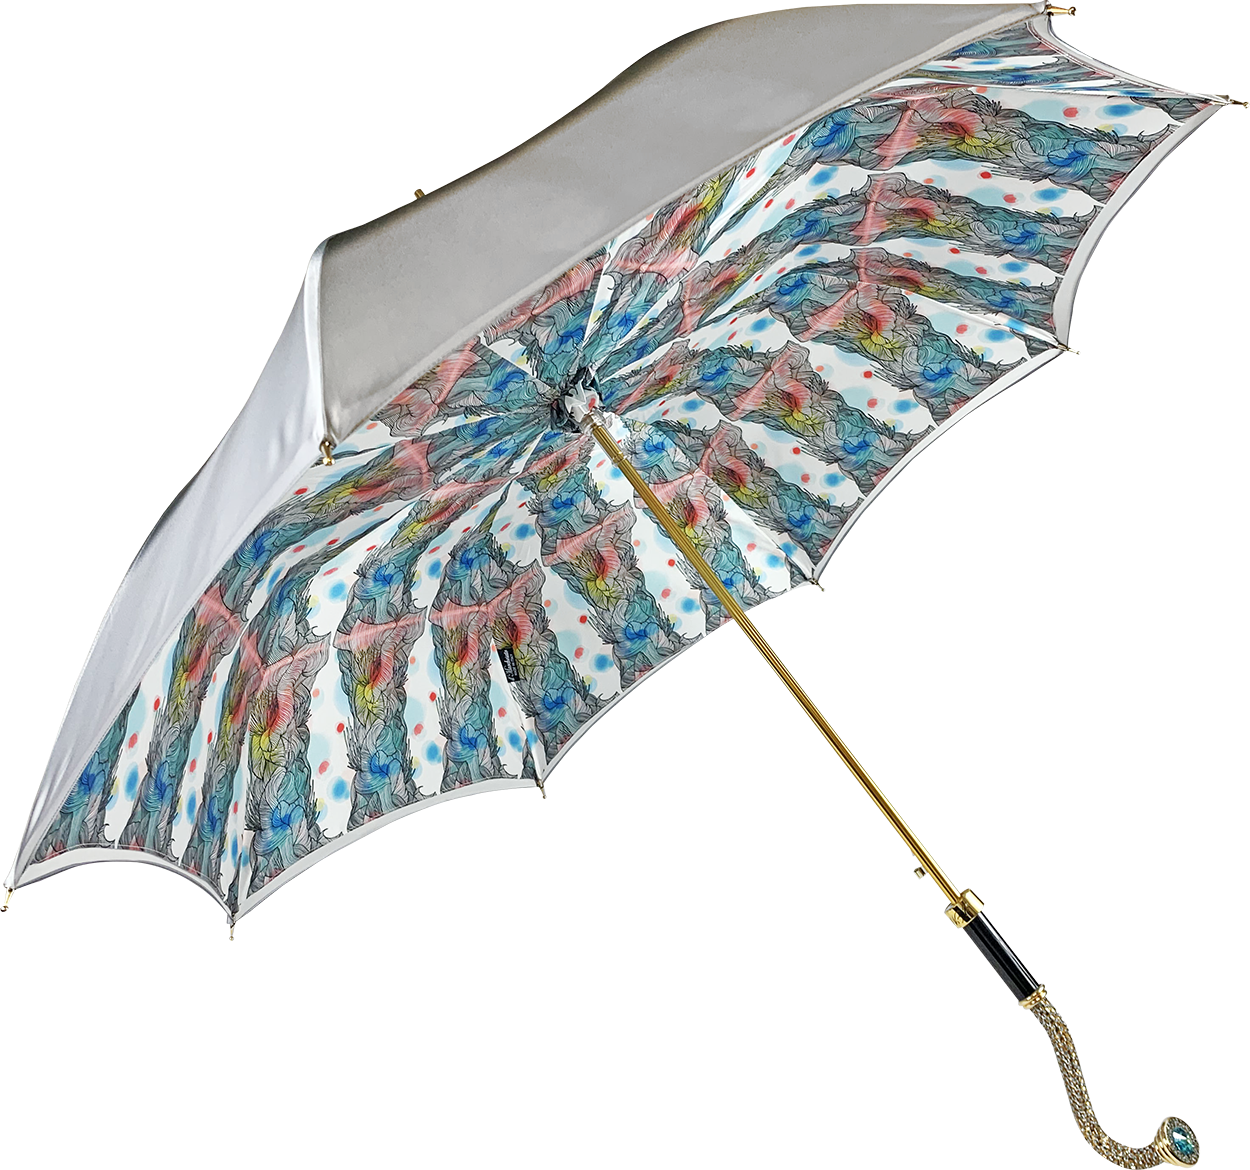 Stunning Grey Umbrella with "35fili" Anemones design